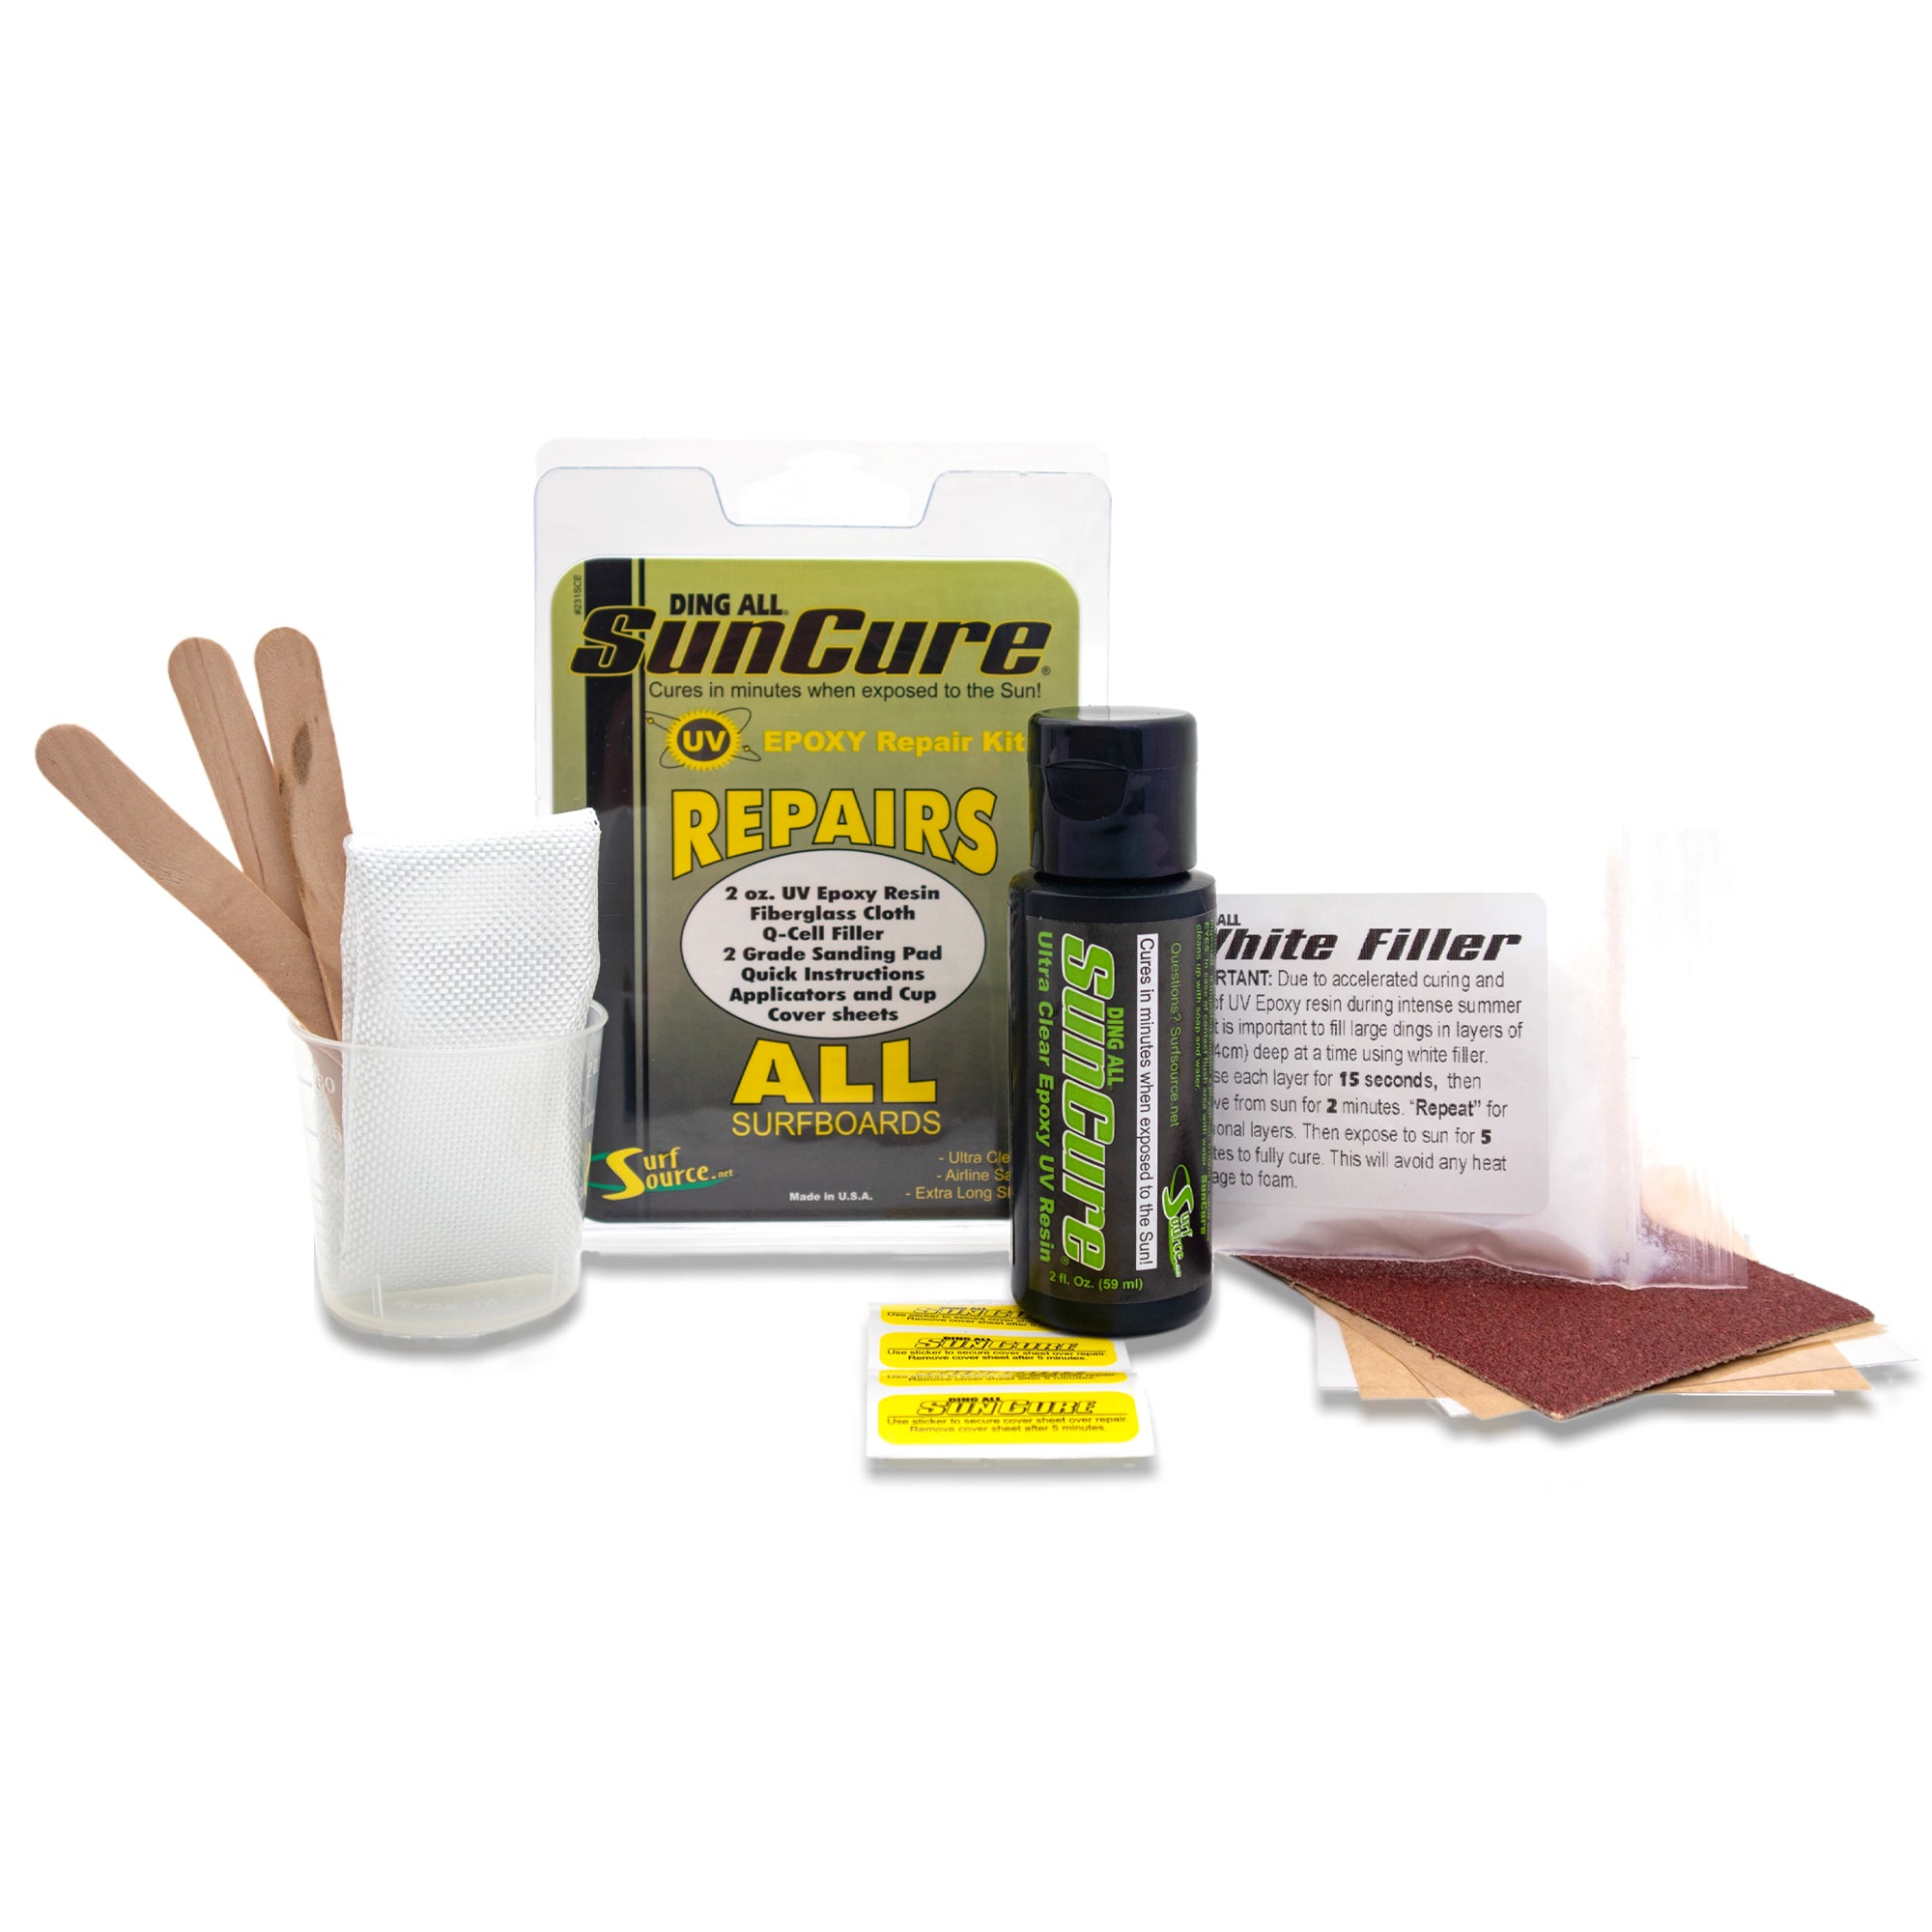 Ding All Sun Cure Epoxy Repairs All Repair Kit